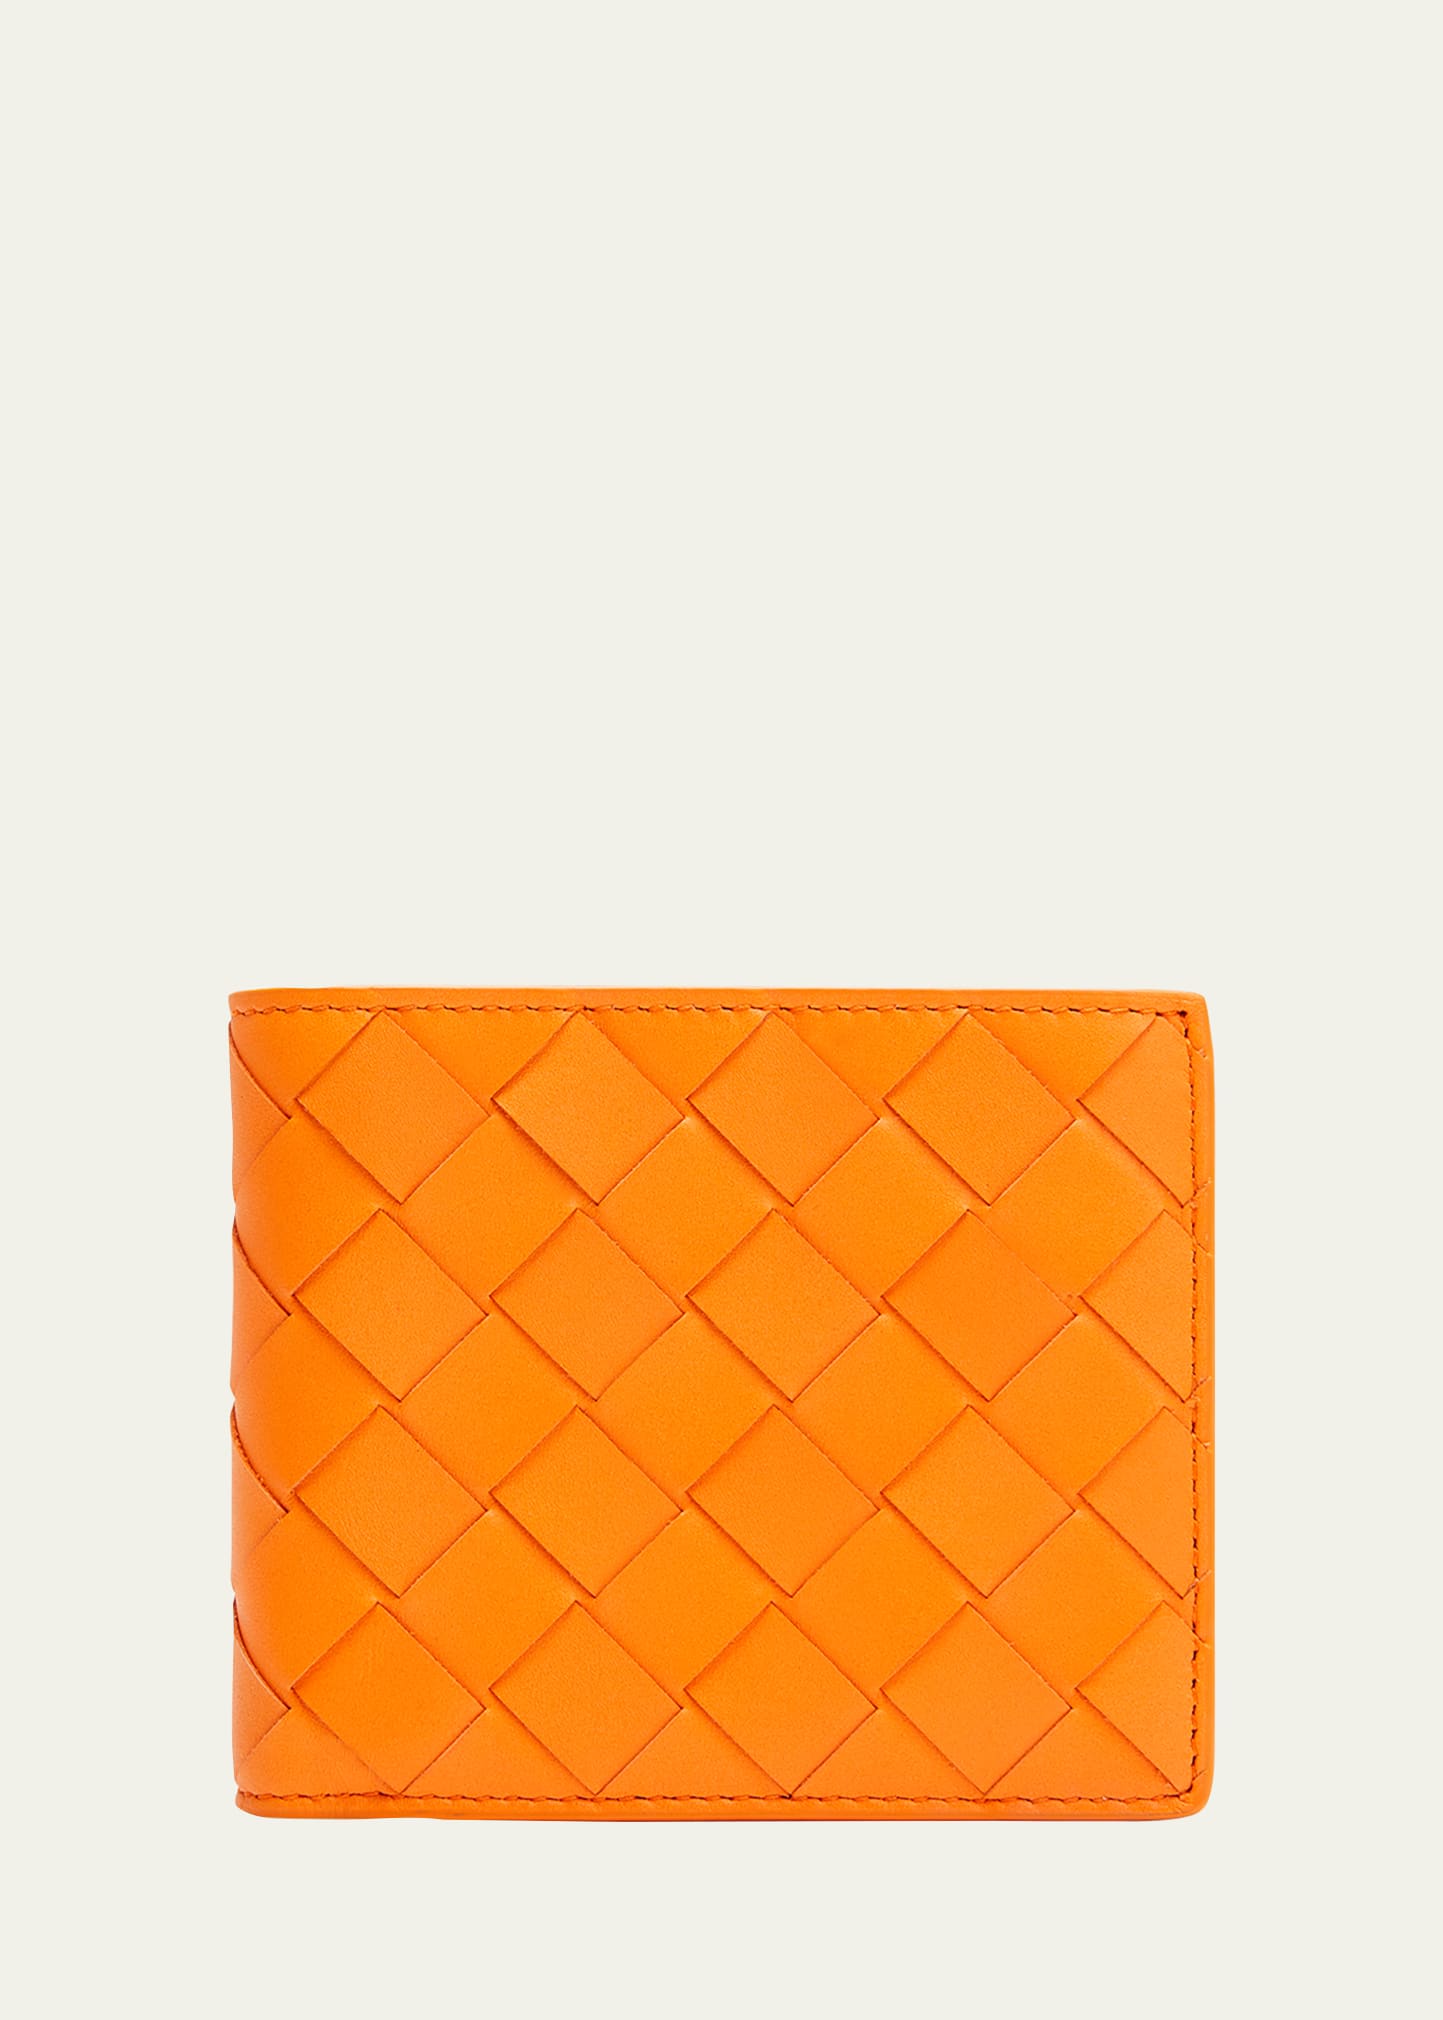 Bottega Veneta Men's Intrecciato Leather Bifold Wallet In Sunset